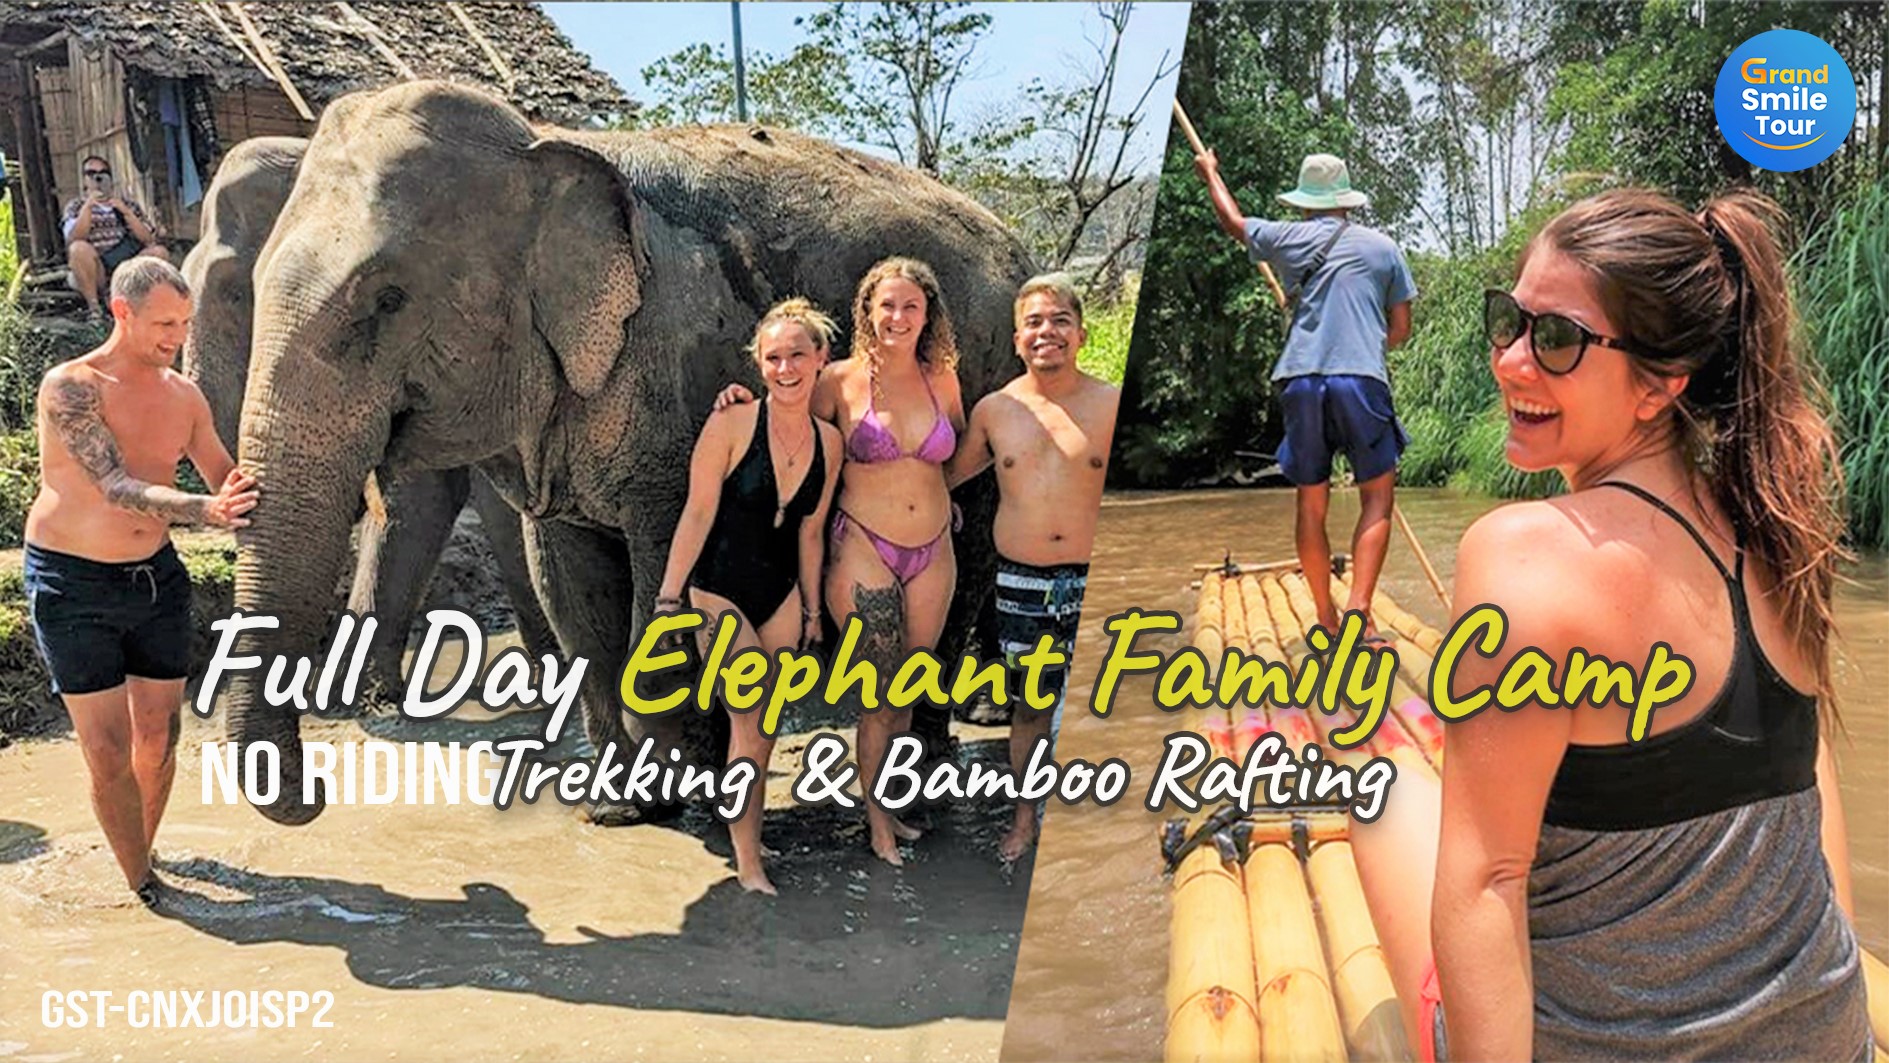 GST-CNXJOISP2 Full Day Elephant Family Camp